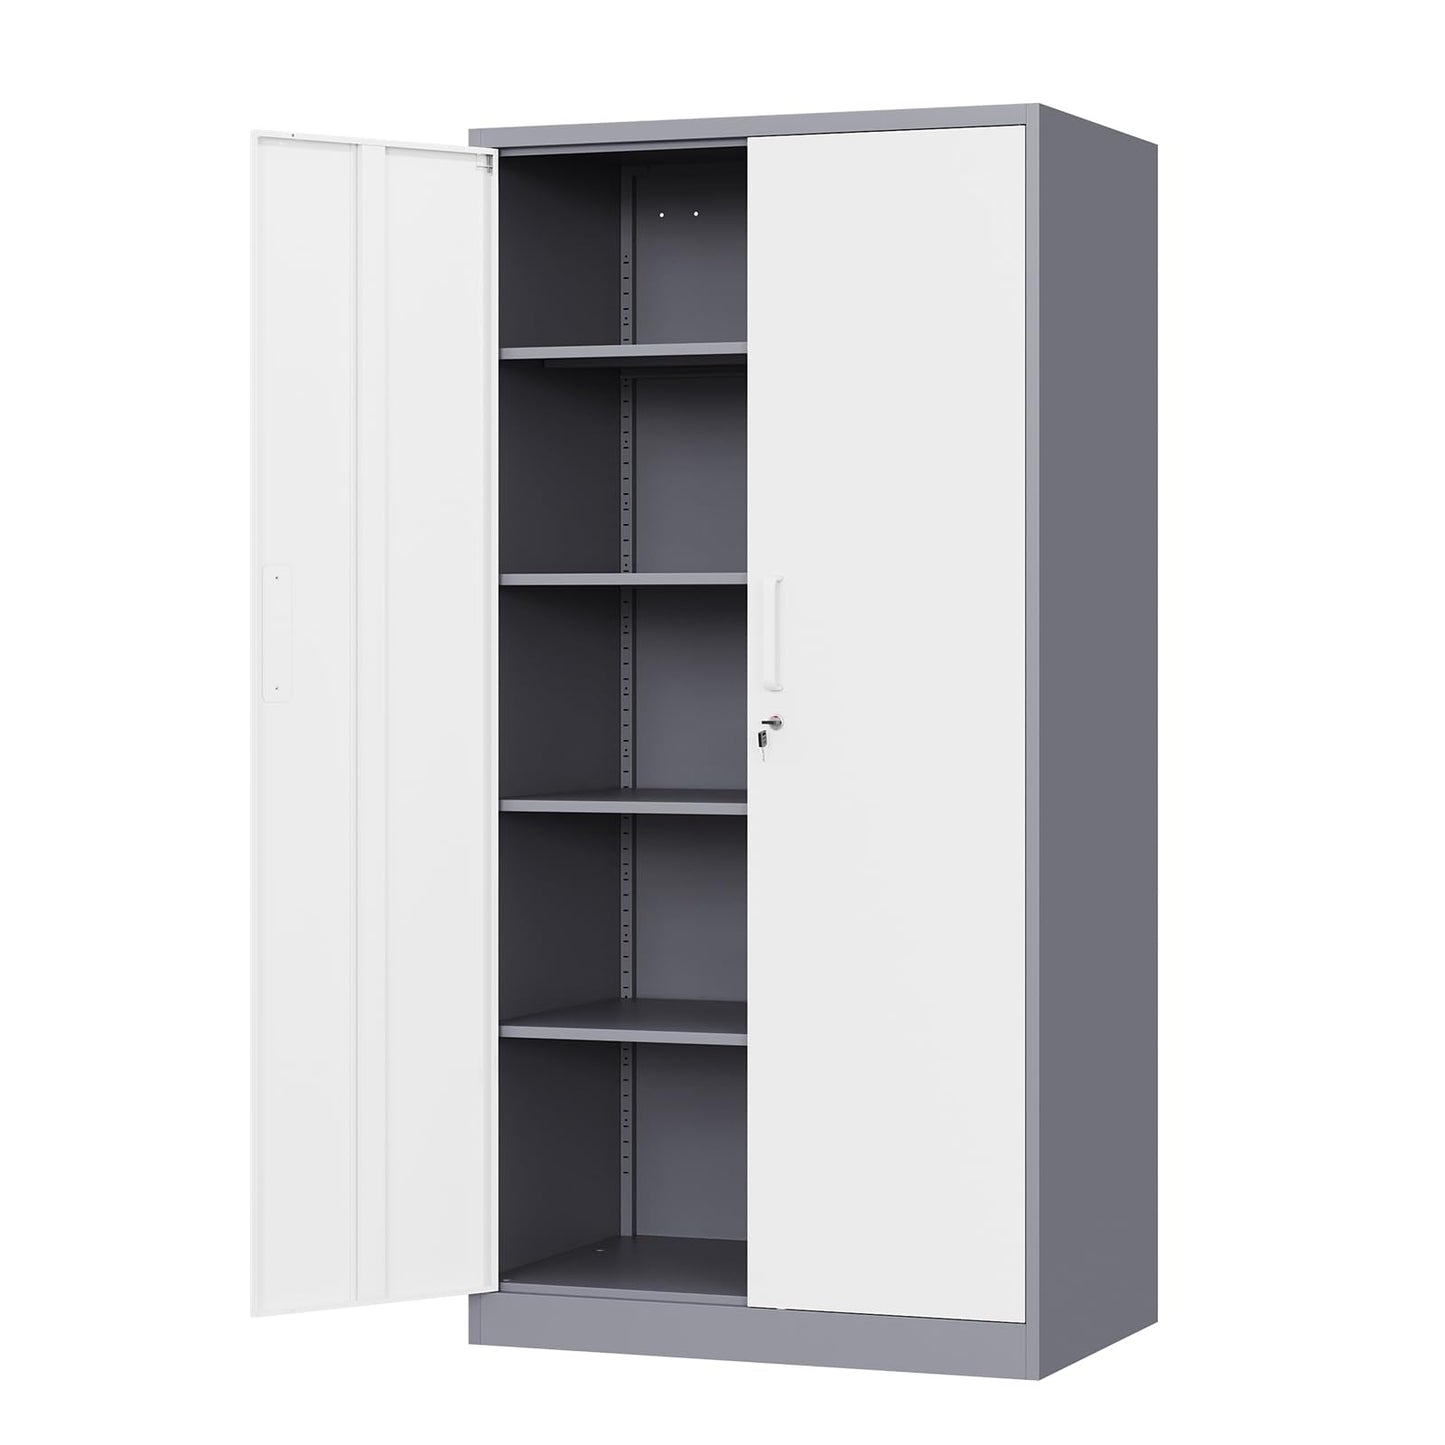 Yizosh Metal Storage Cabinet with Lock - 72" Garage Storage Cabinet with 2 Locking Doors and 4 Adjustable Shelves, Gray White Steel Lockable File